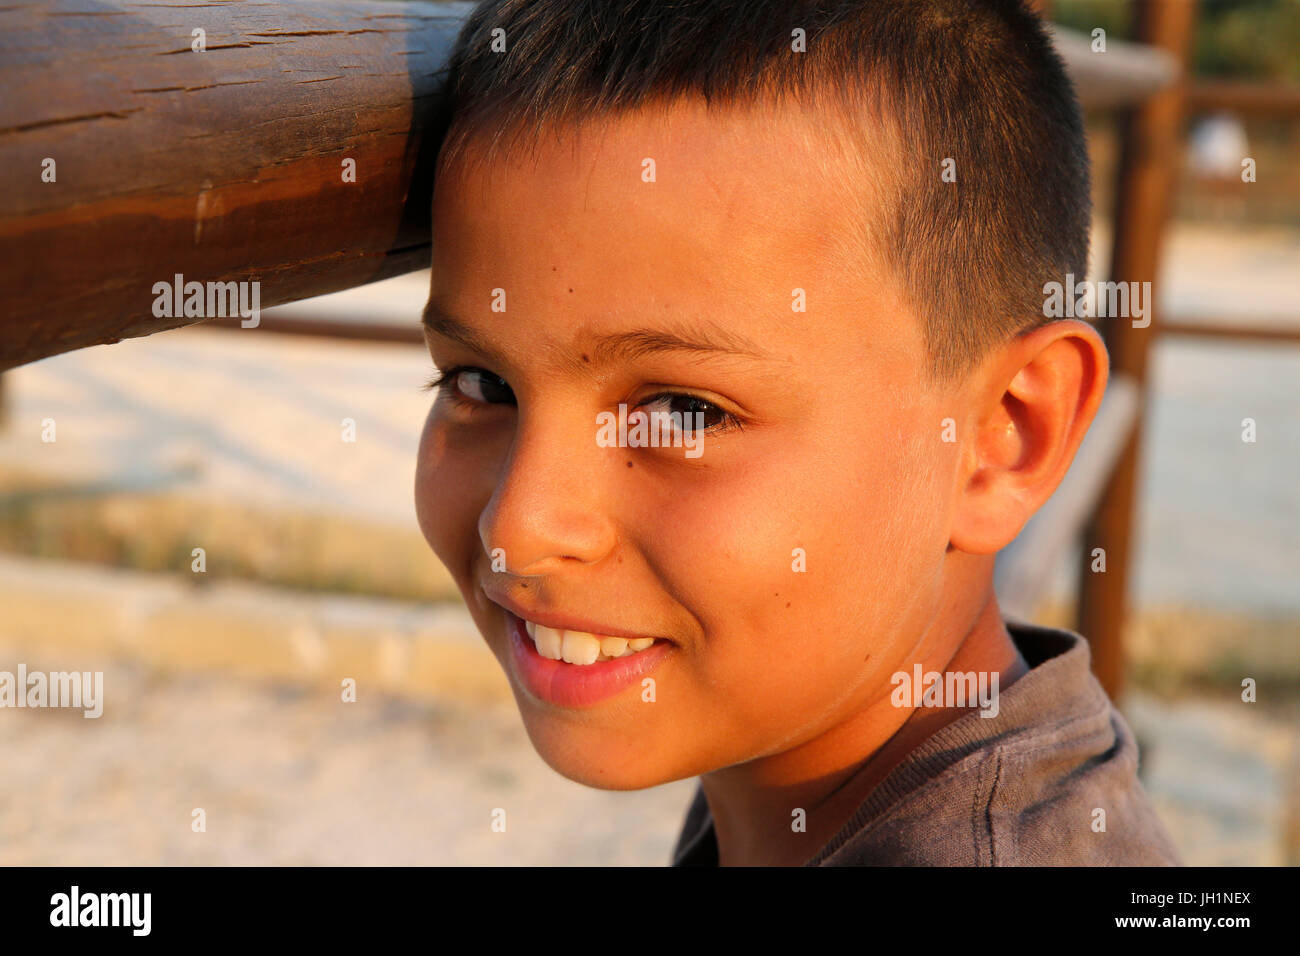 Smiling boy. L'Italie. Banque D'Images